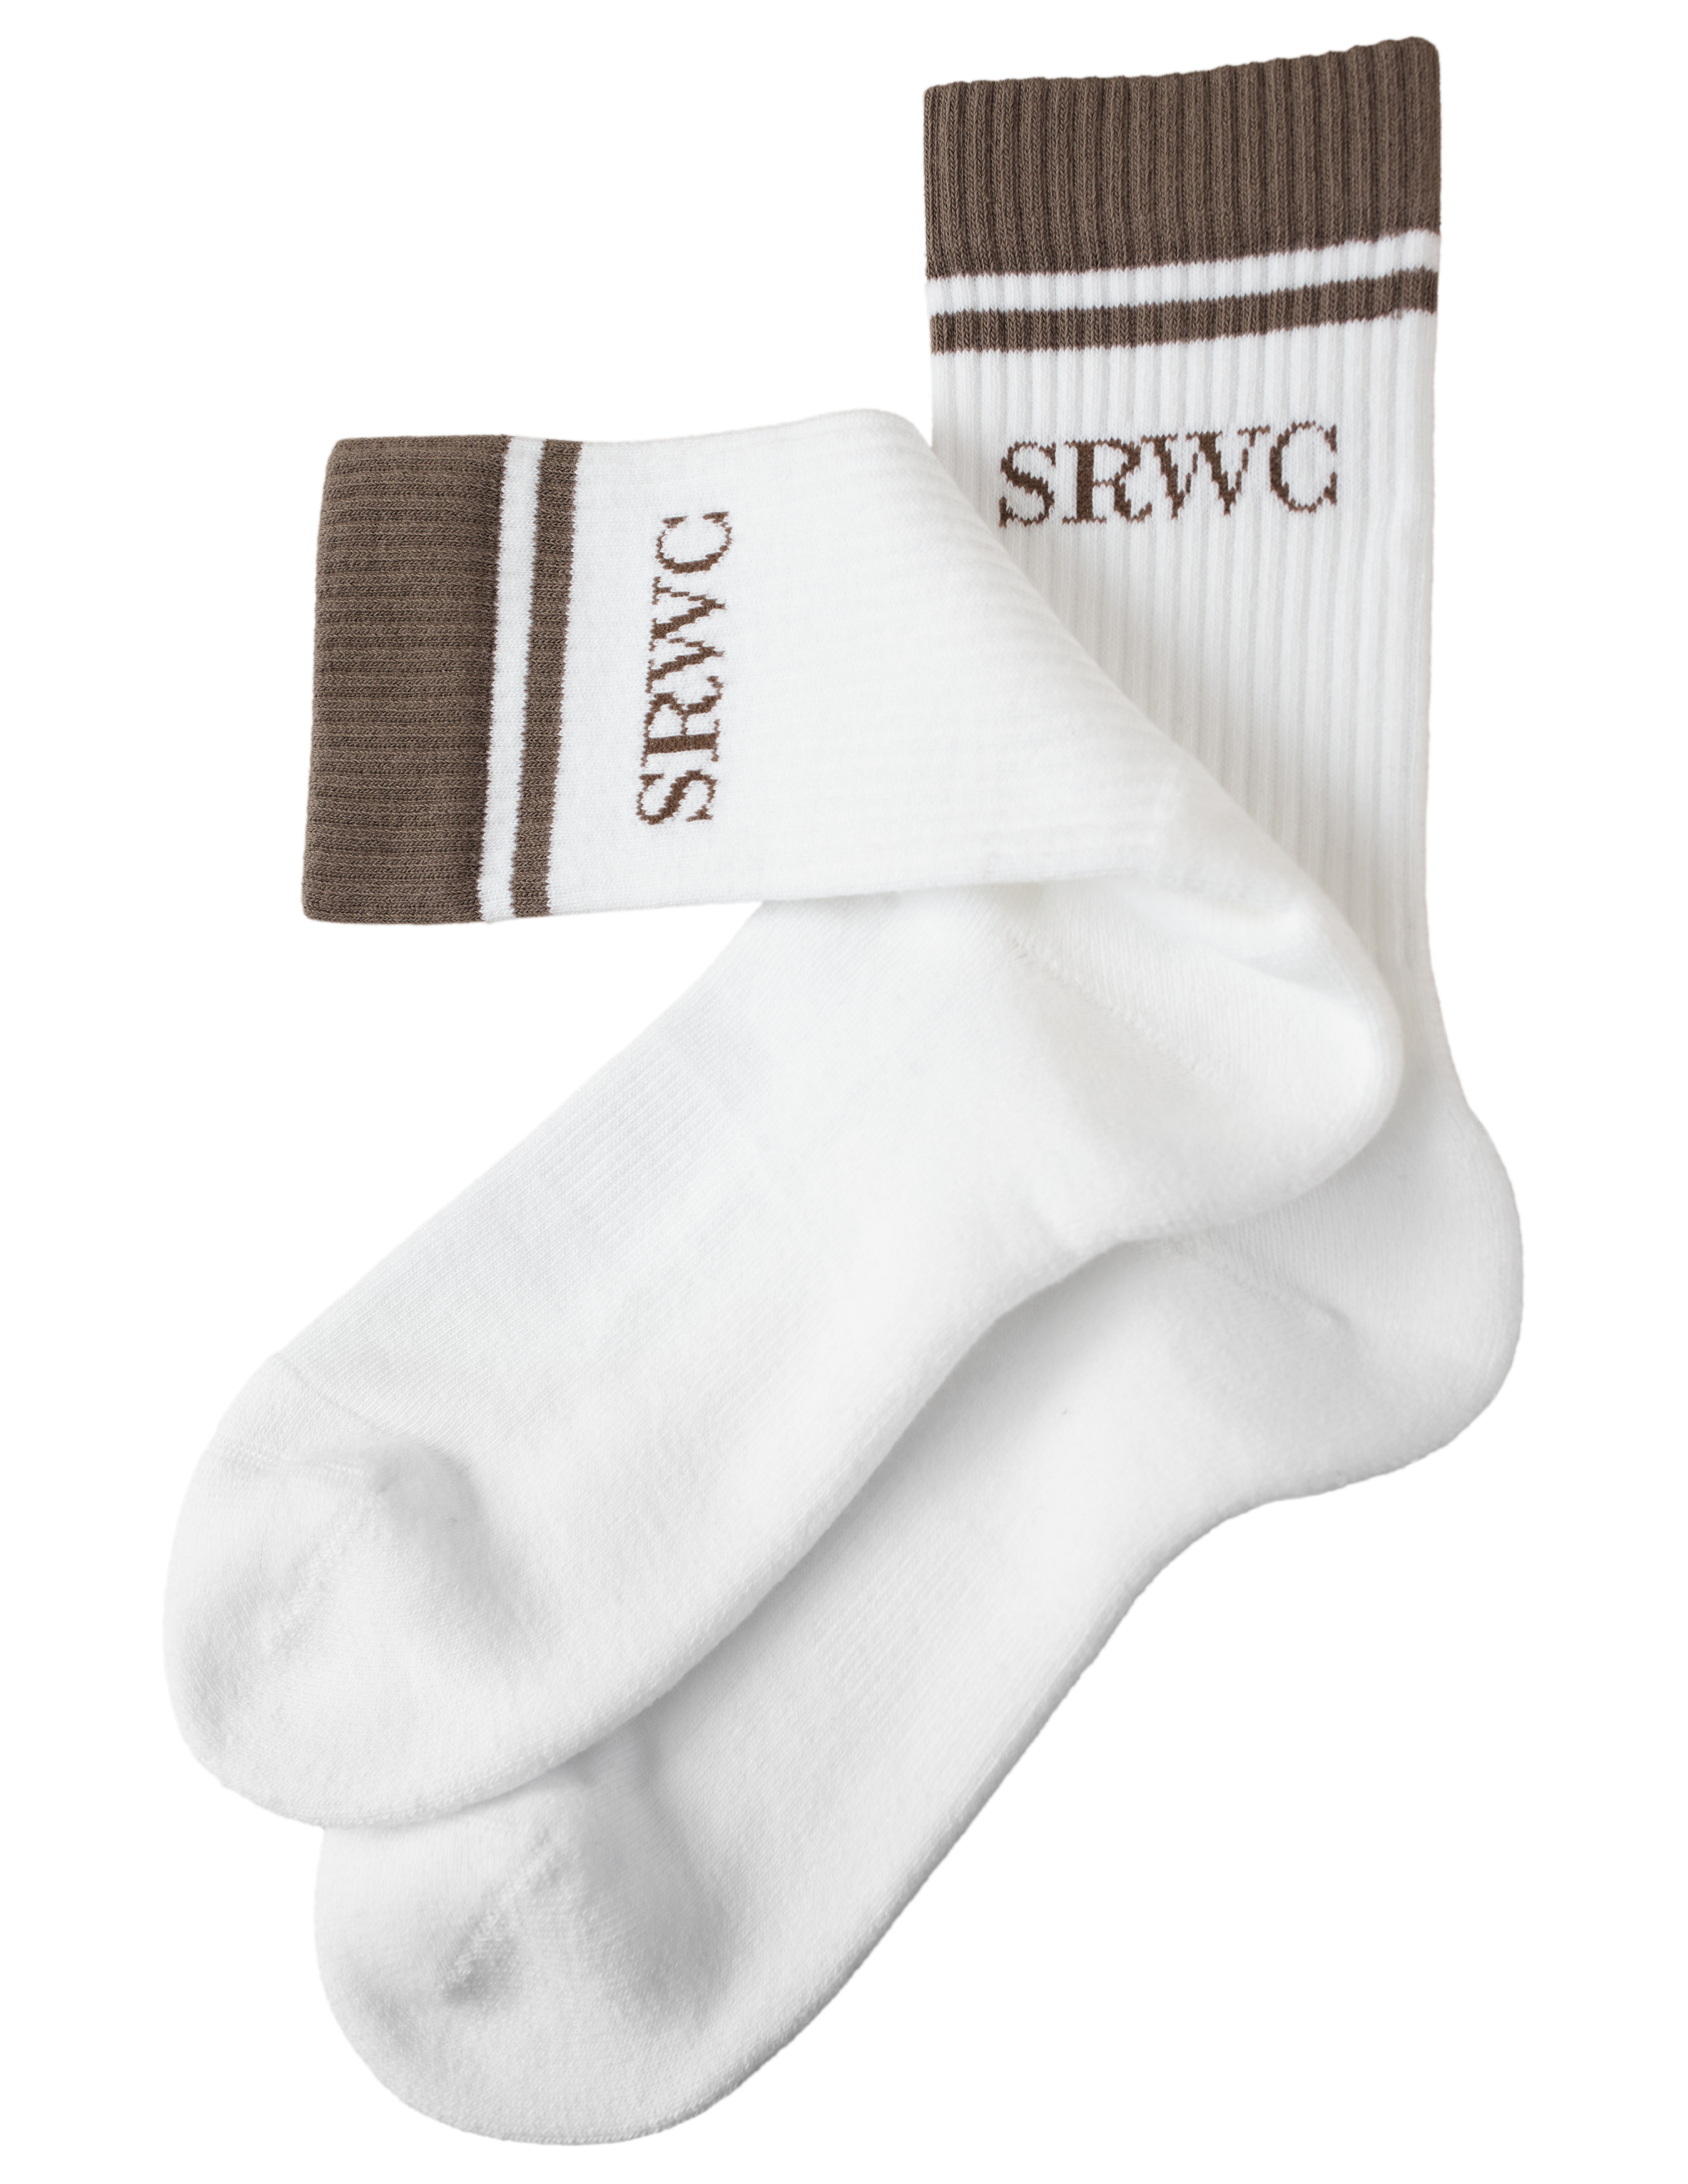 Высокие носки с вышивкой SRWC SPORTY & RICH SOAW231WH, размер One Size